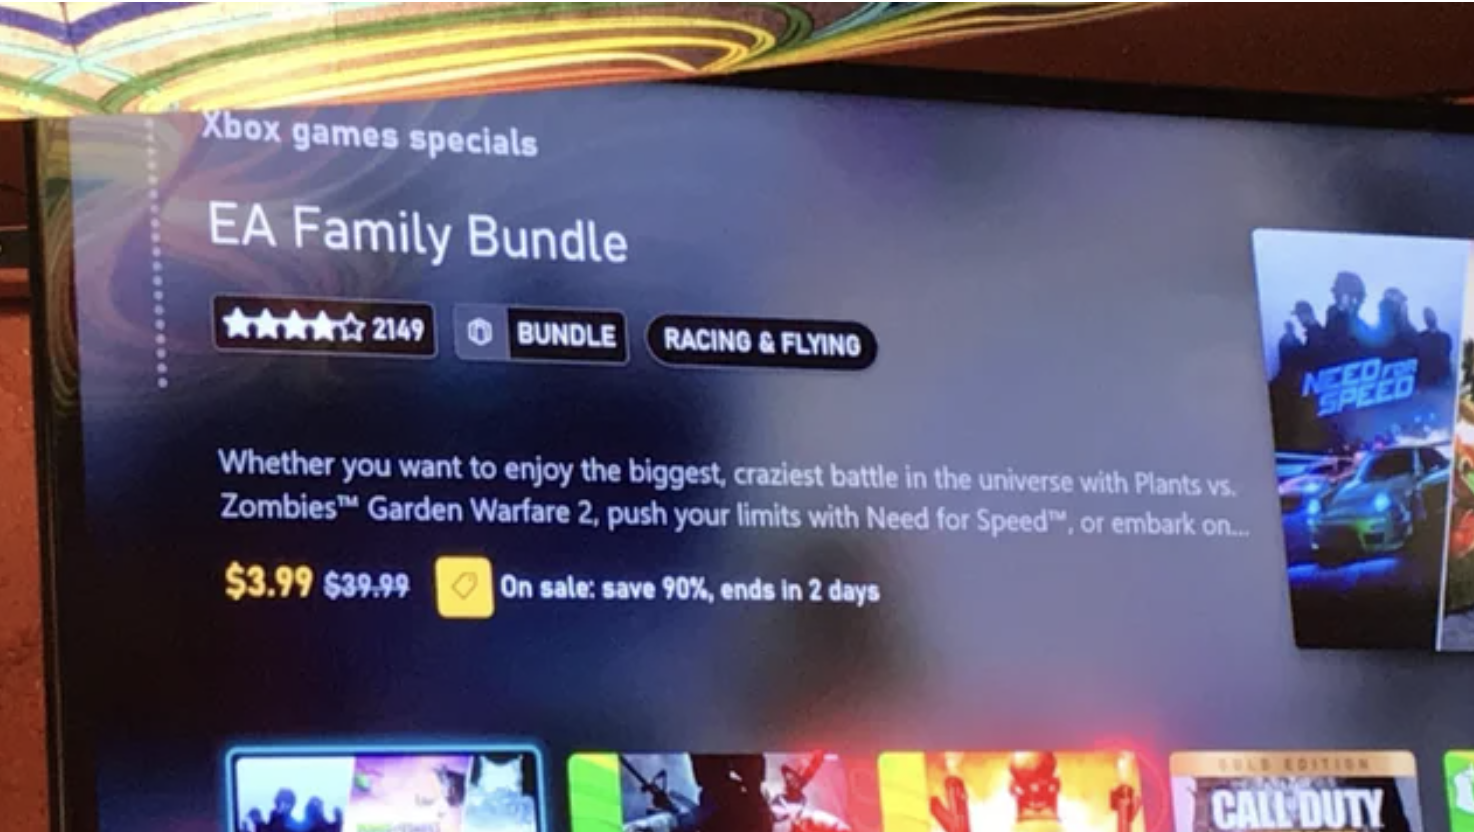 Gaming Memes - gadget - Xbox games specials Ea Family Bundle